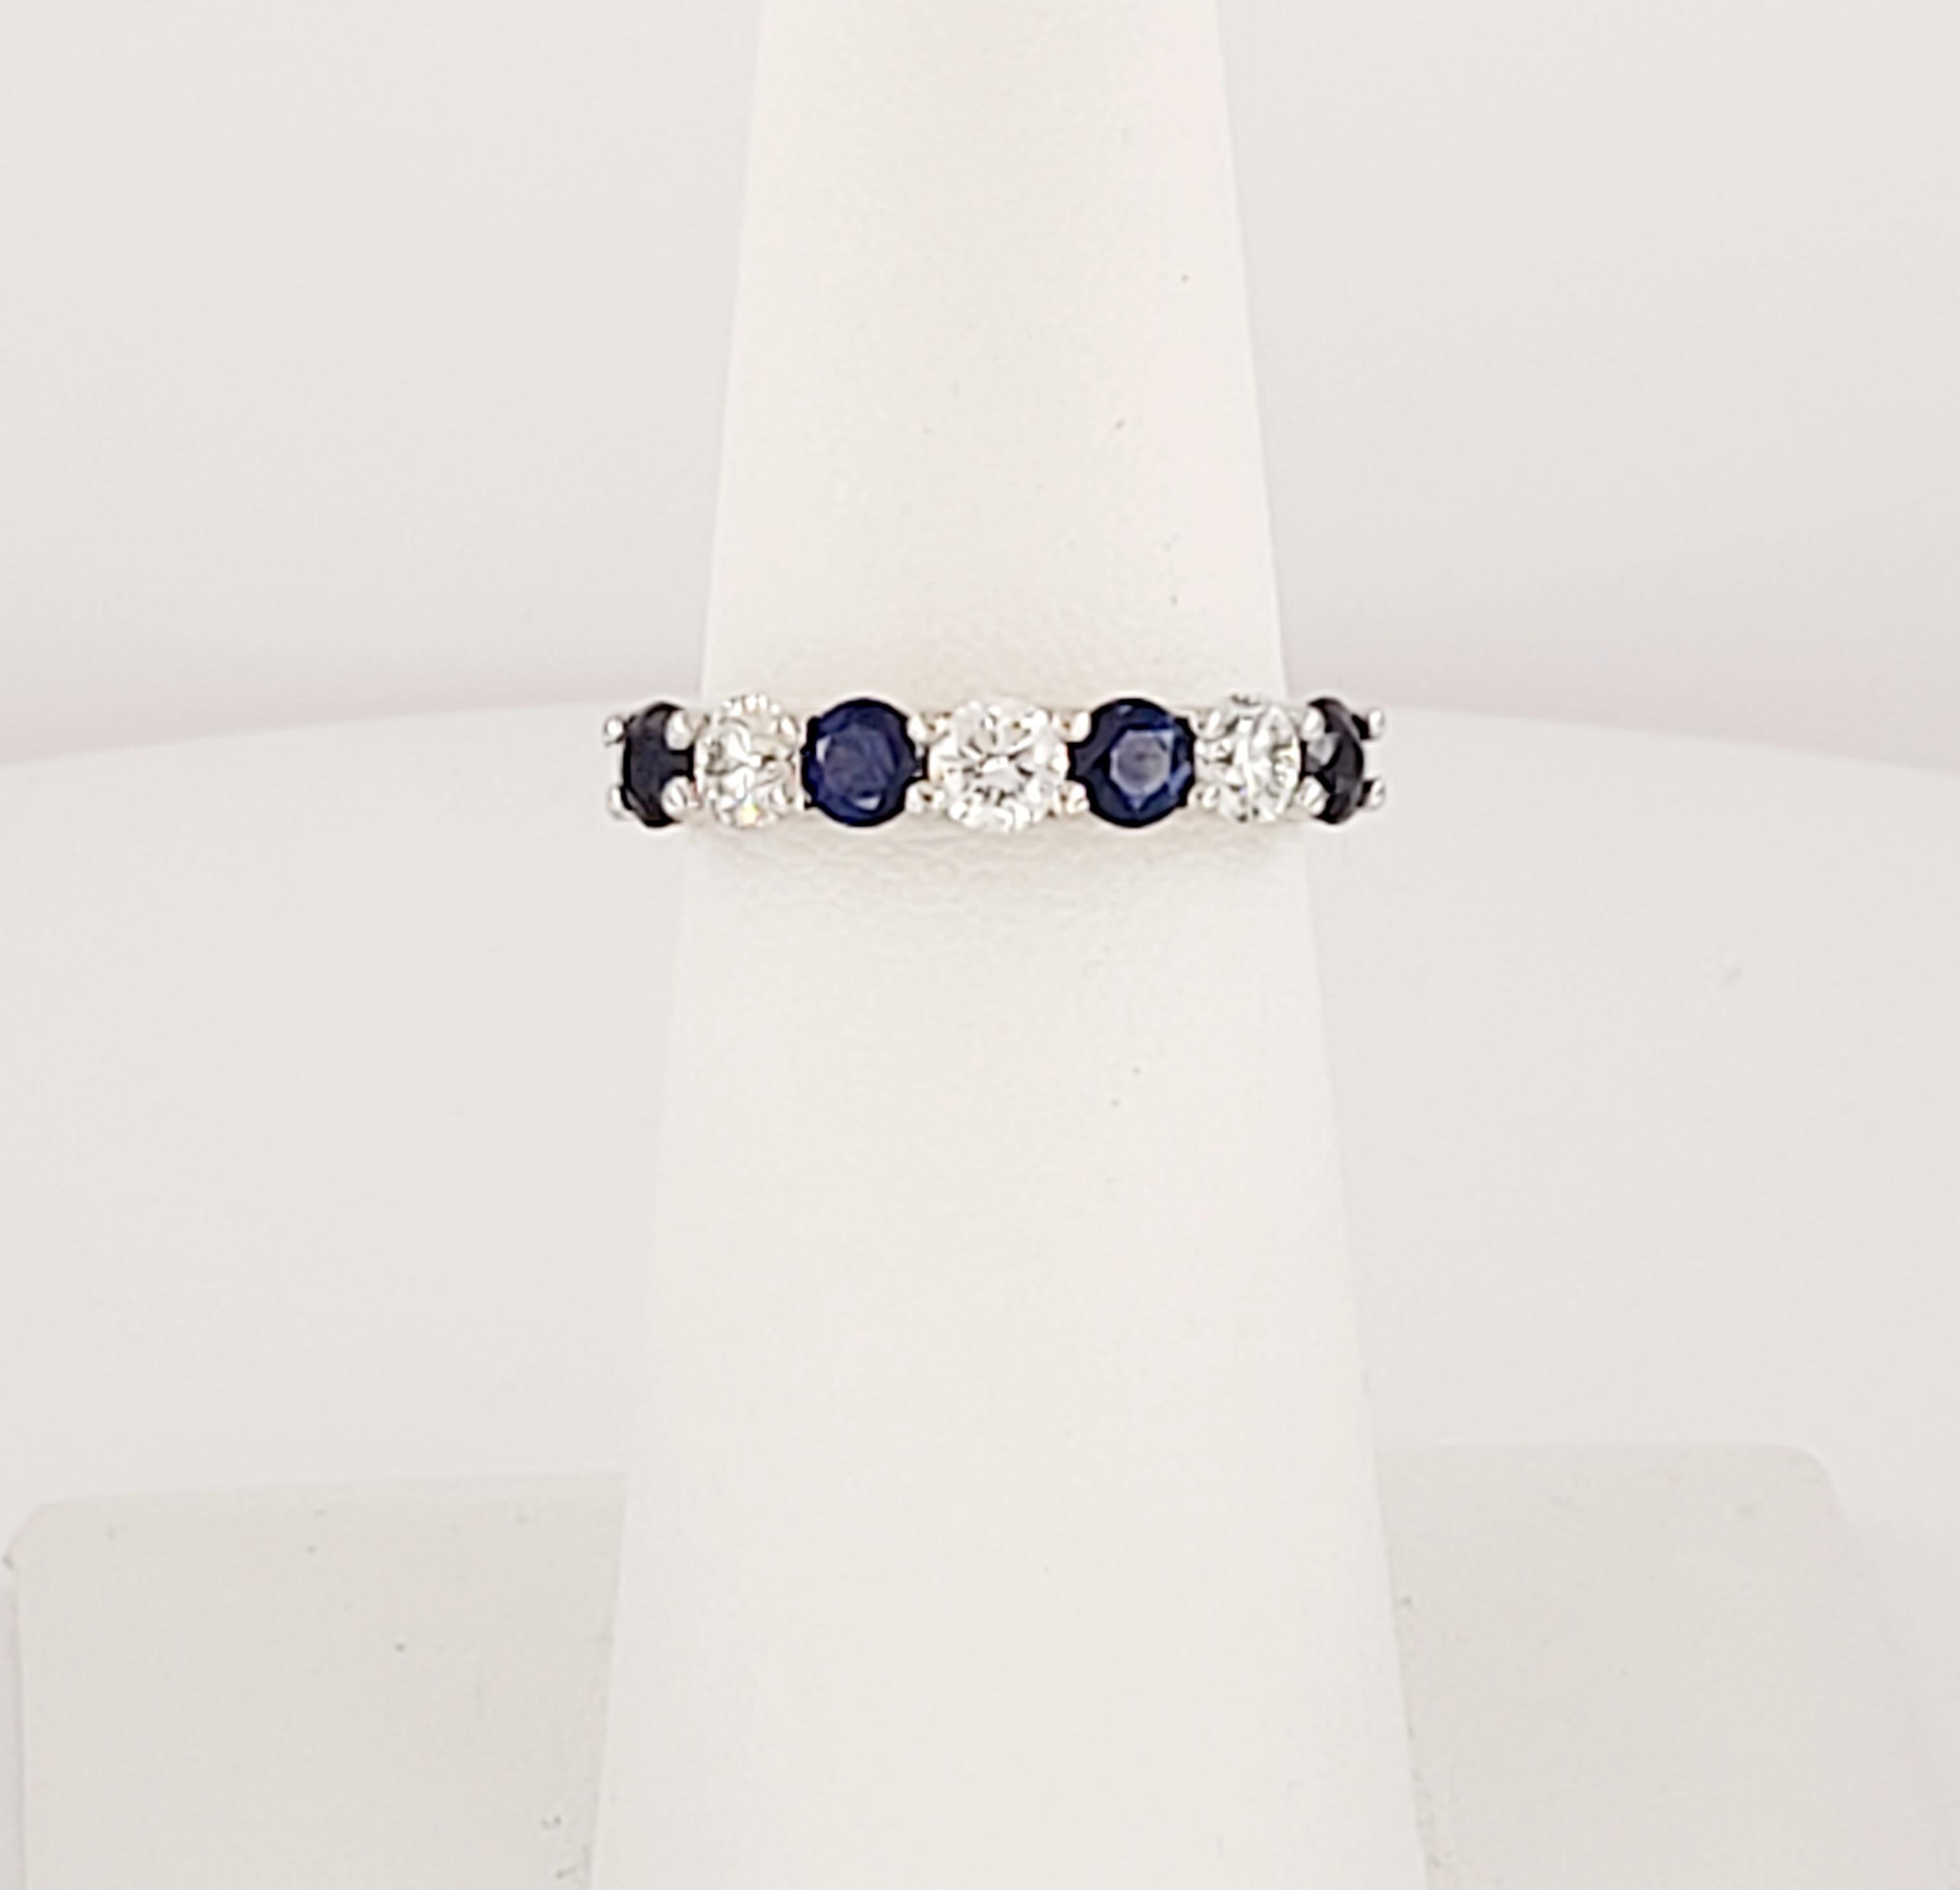 Brand Tiffany& co
Style Forever 
Hallmarks: Tiffany & co PT950 
Material Platinum 950
Sapphire Stone 4pcs
Sapphire .40ct
Diamonds 3pcs 
Diamonds .24ct
Diamond Clarity VS1  
Color Grade E-F
Ring Size 6 
Retail Price: $5.650